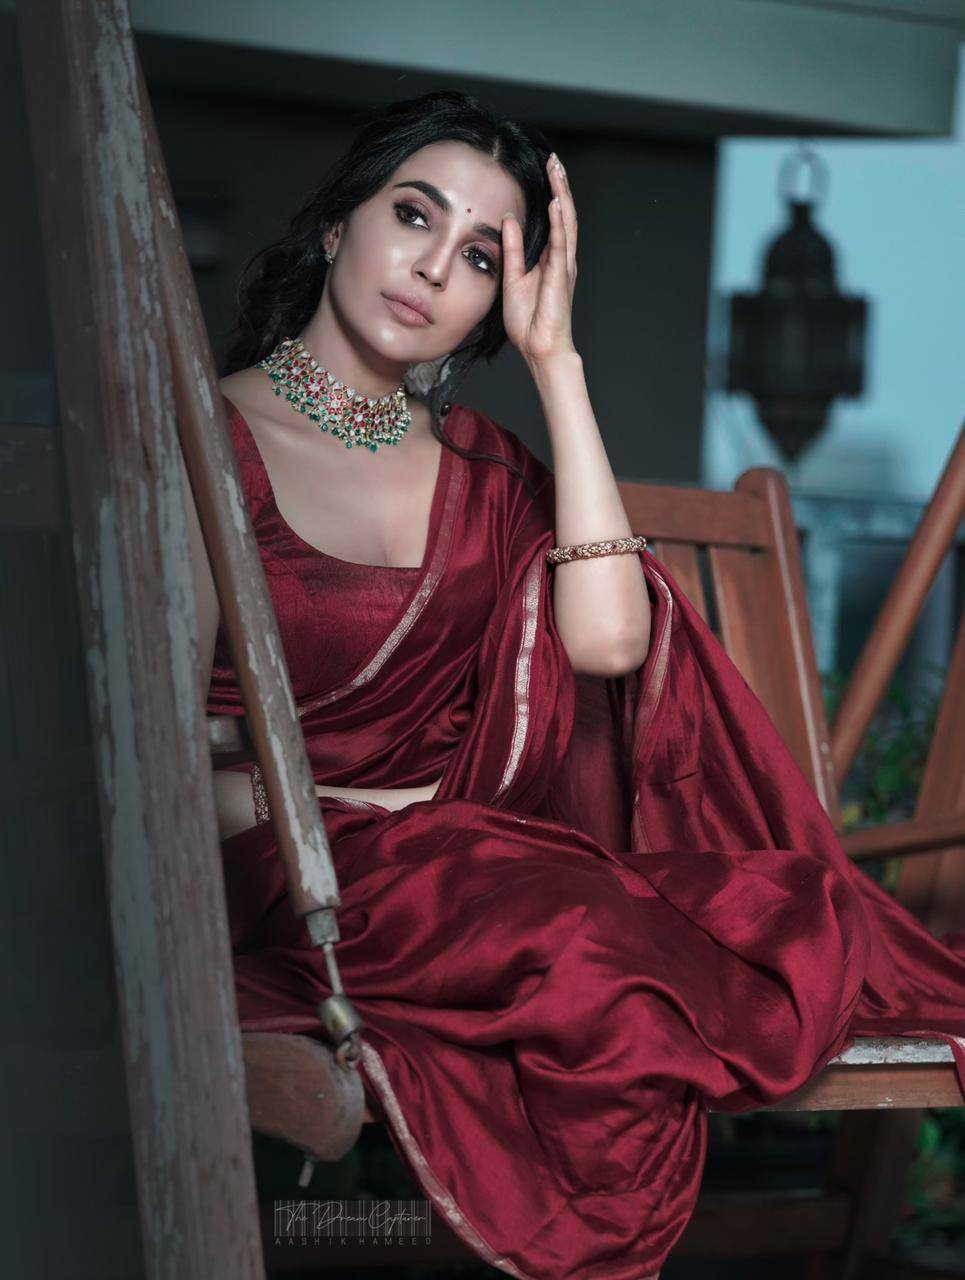 Parvathy Nair in an enchanting red saree makes all men go ‘ooh la la’.